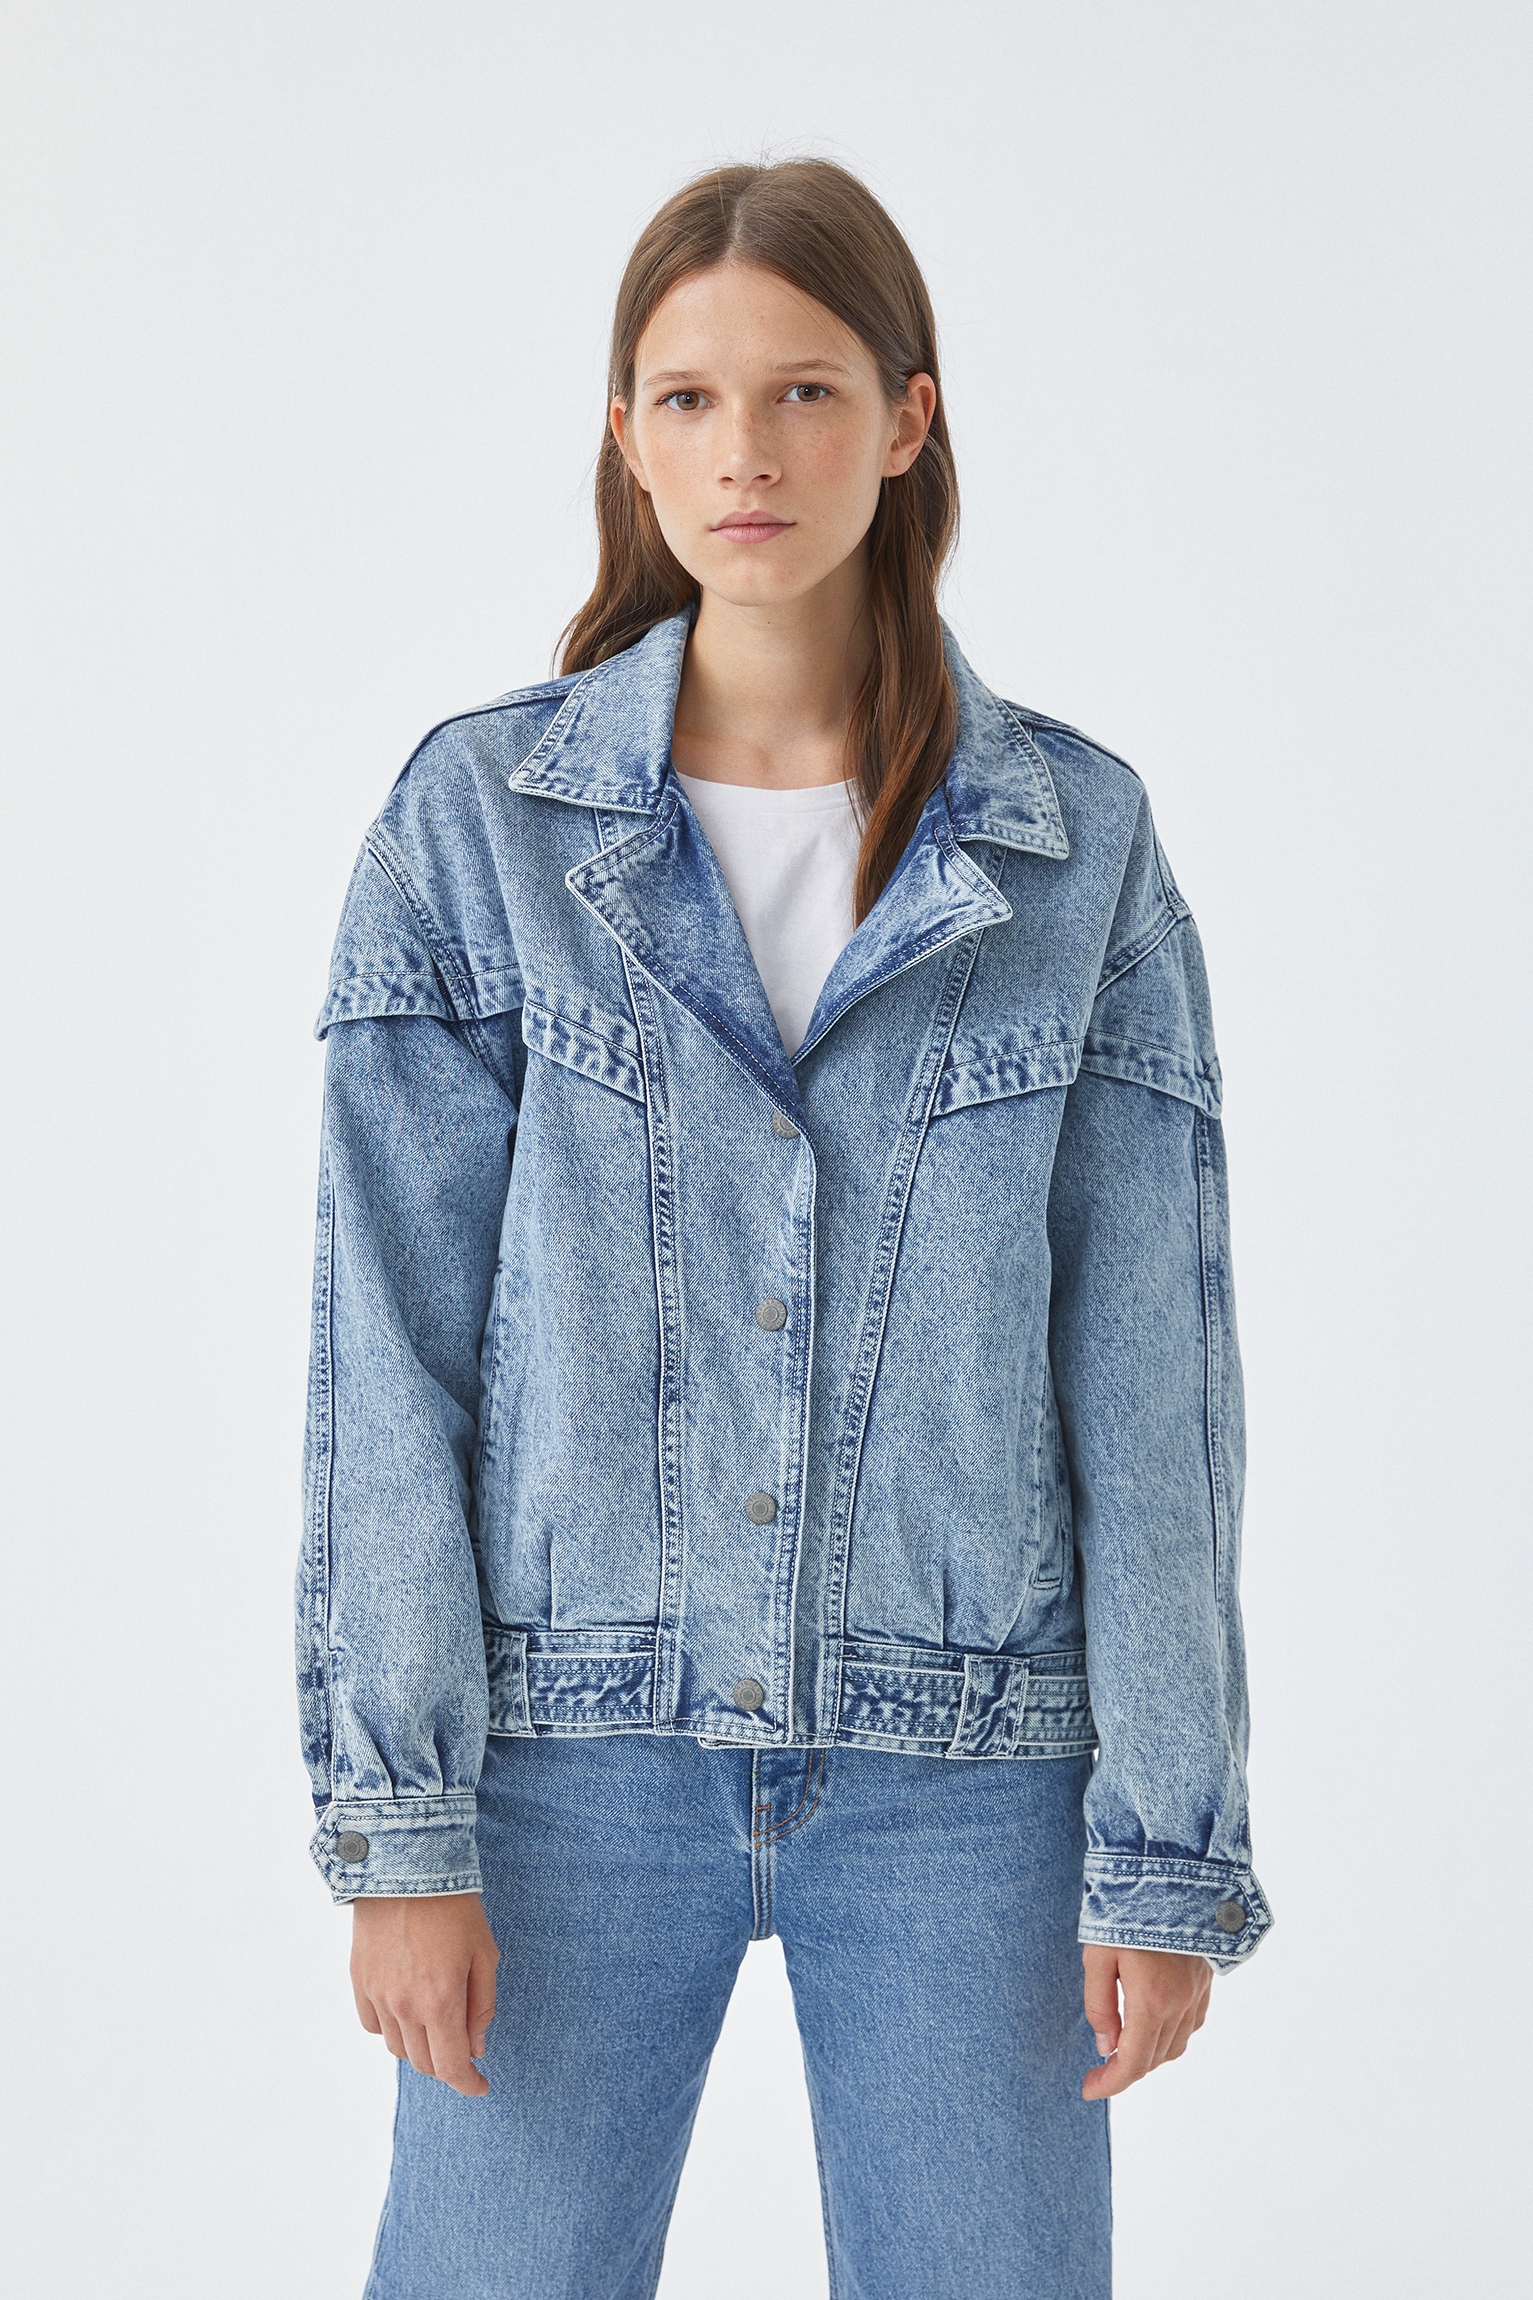 jeans jacket 80s